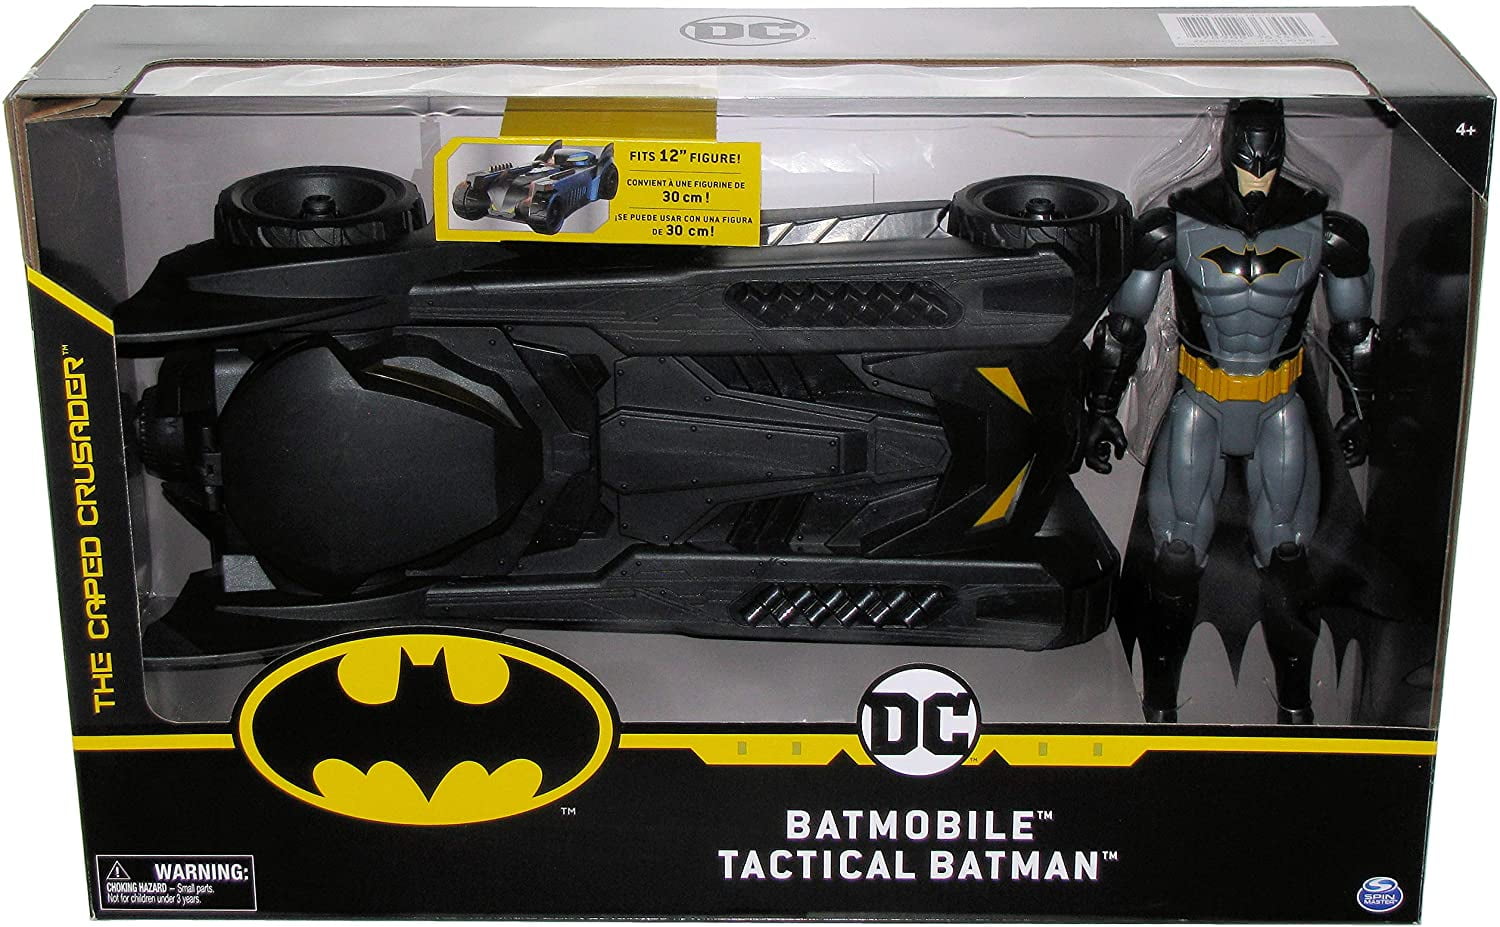 Iconic Batmobile and 12-inch Tactical Batman Set NEW!! 